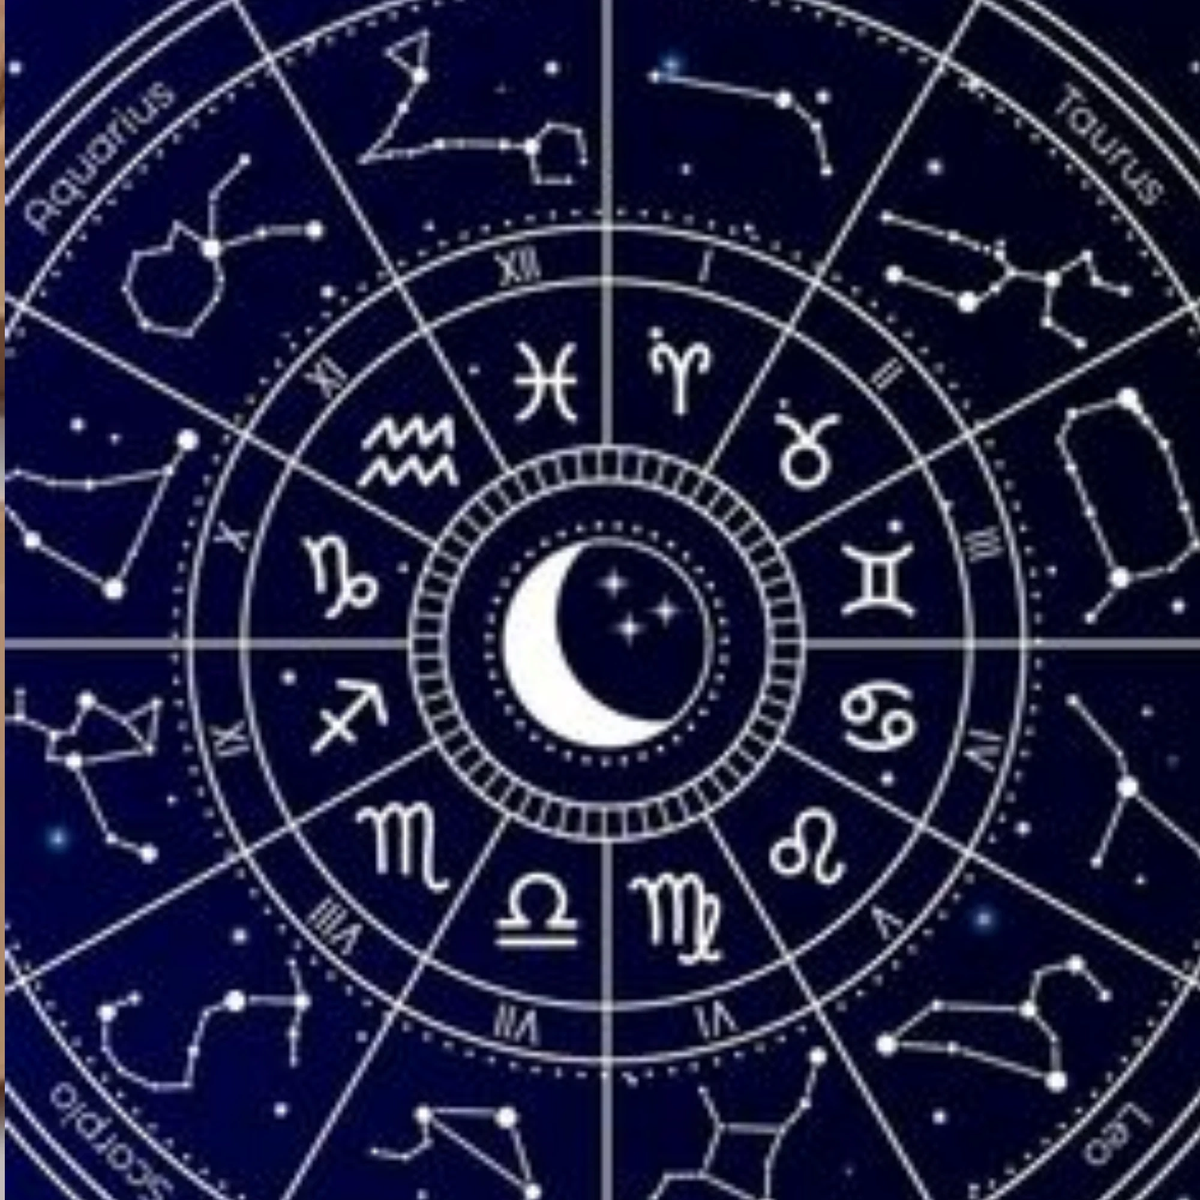 Символы созвездий. Созвездия знаков зодиака. 12 Зодиакальных созвездий. Пояс созвездий знаки зодиака. Зодиака глоба